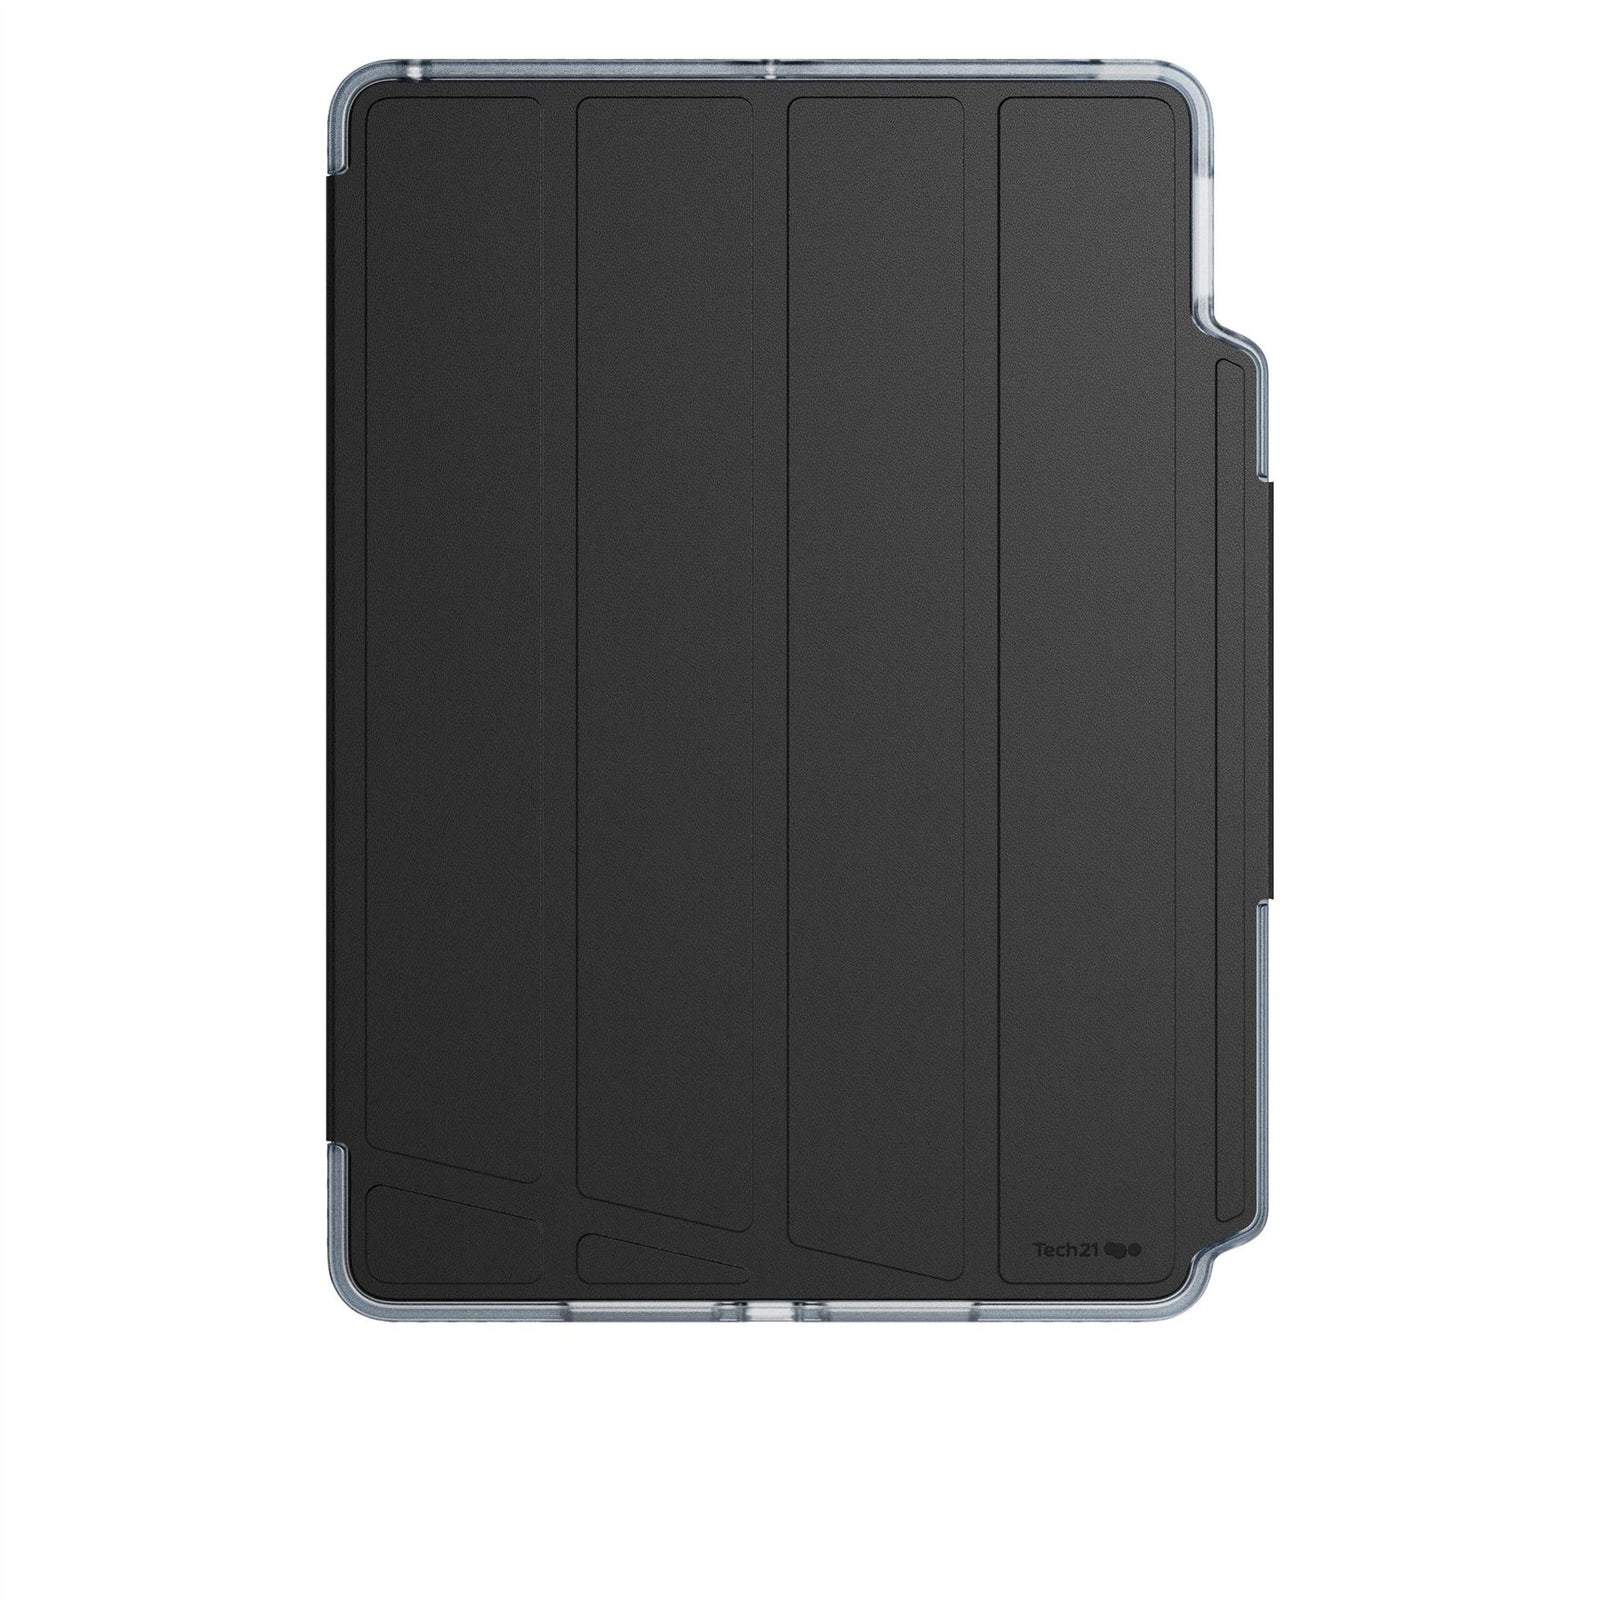 Apple iPad & iPad Mini Cases, Multi-drop Protection